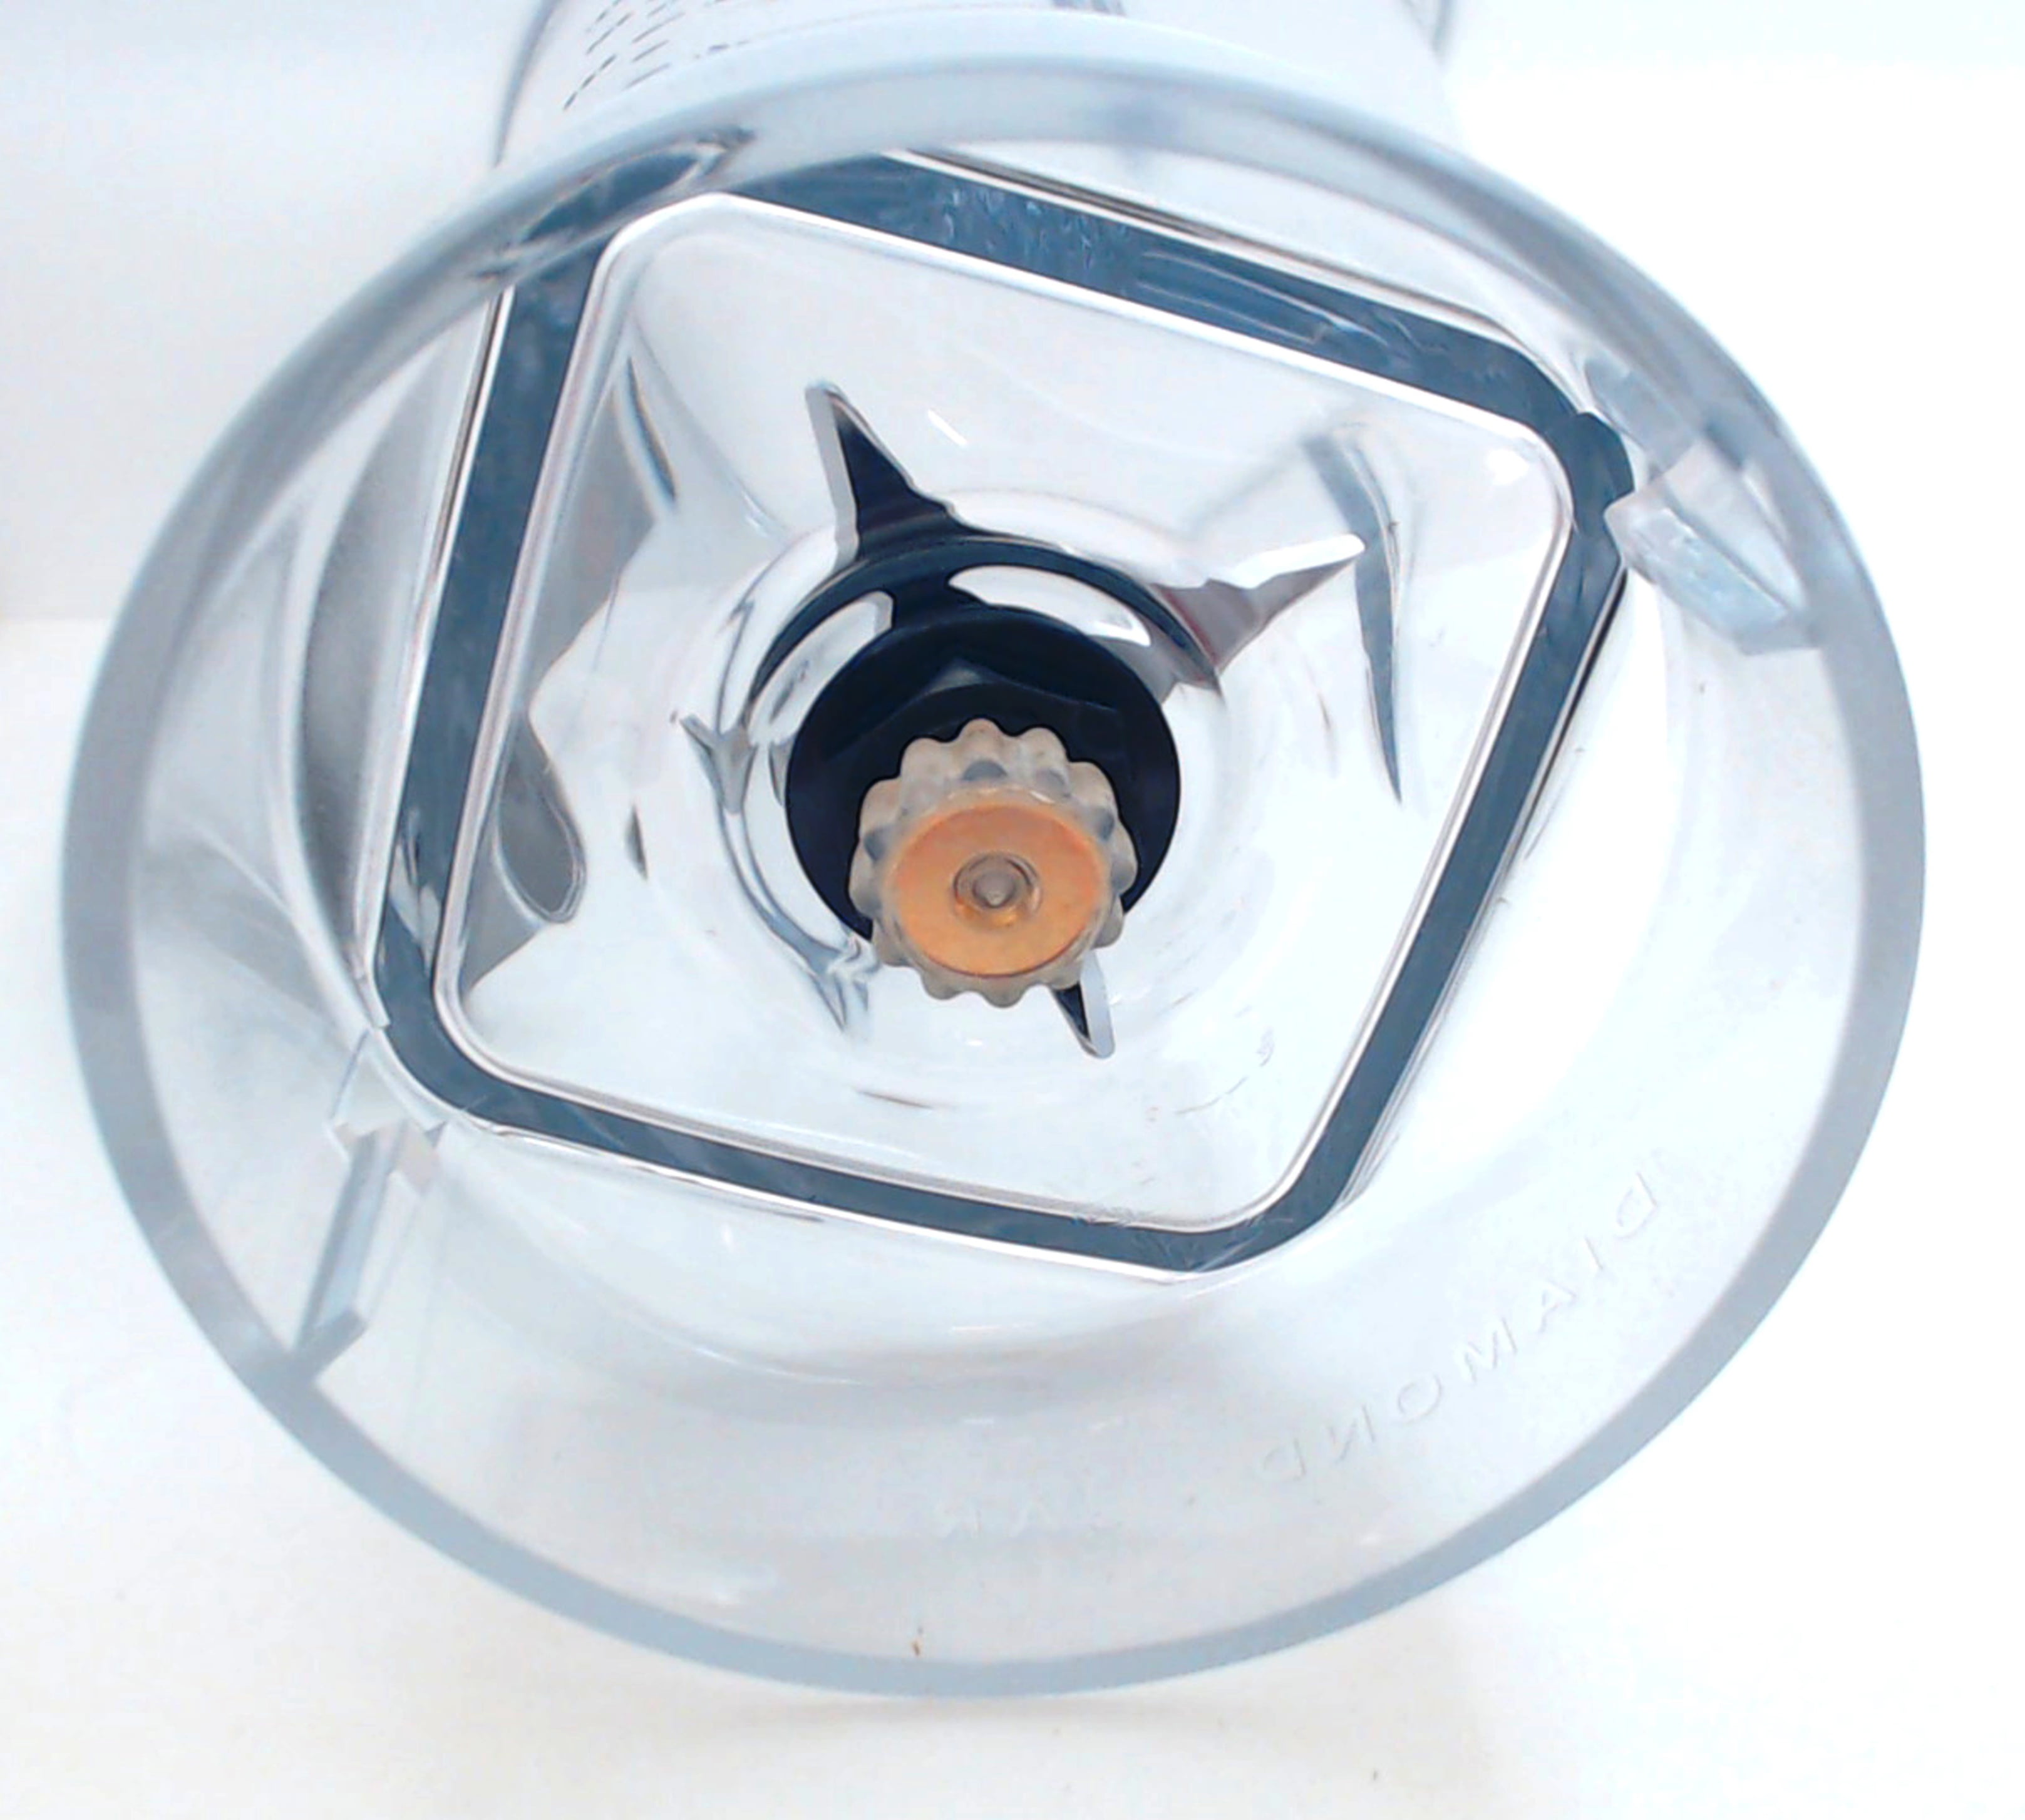 WPW10514649 - Whirlpool Plastic Blender Jar